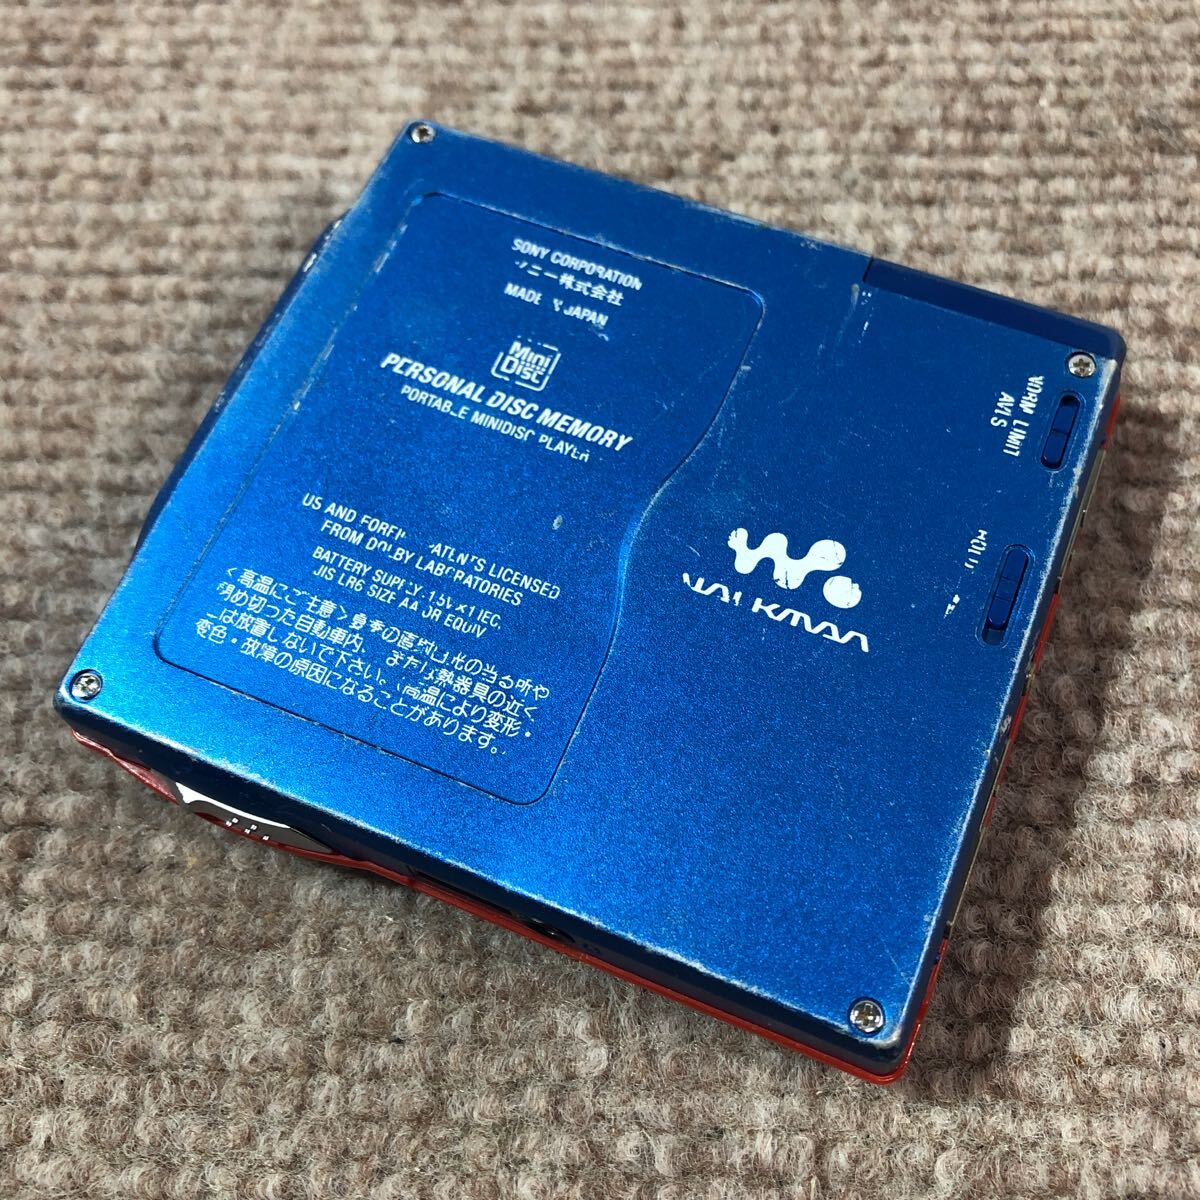 SONY Sony MZ-E700 MD Walkman WALKMAN compact электризация OK текущее состояние товар 